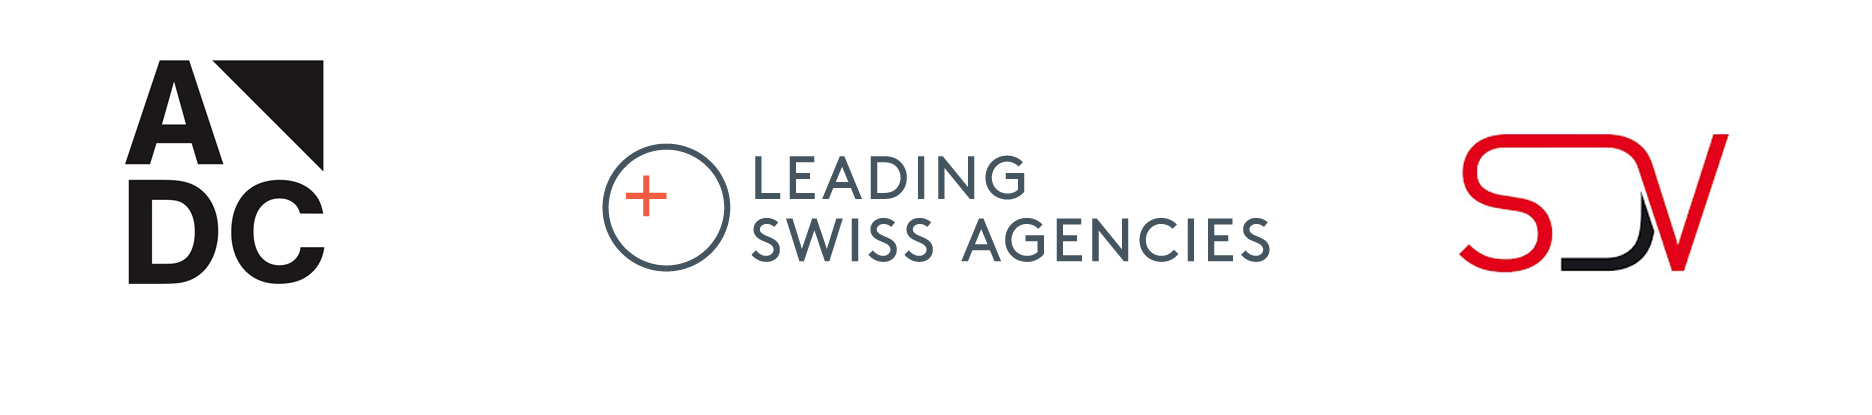 Verbandspartner: ADC, Leading Swiss Agencies, SDV